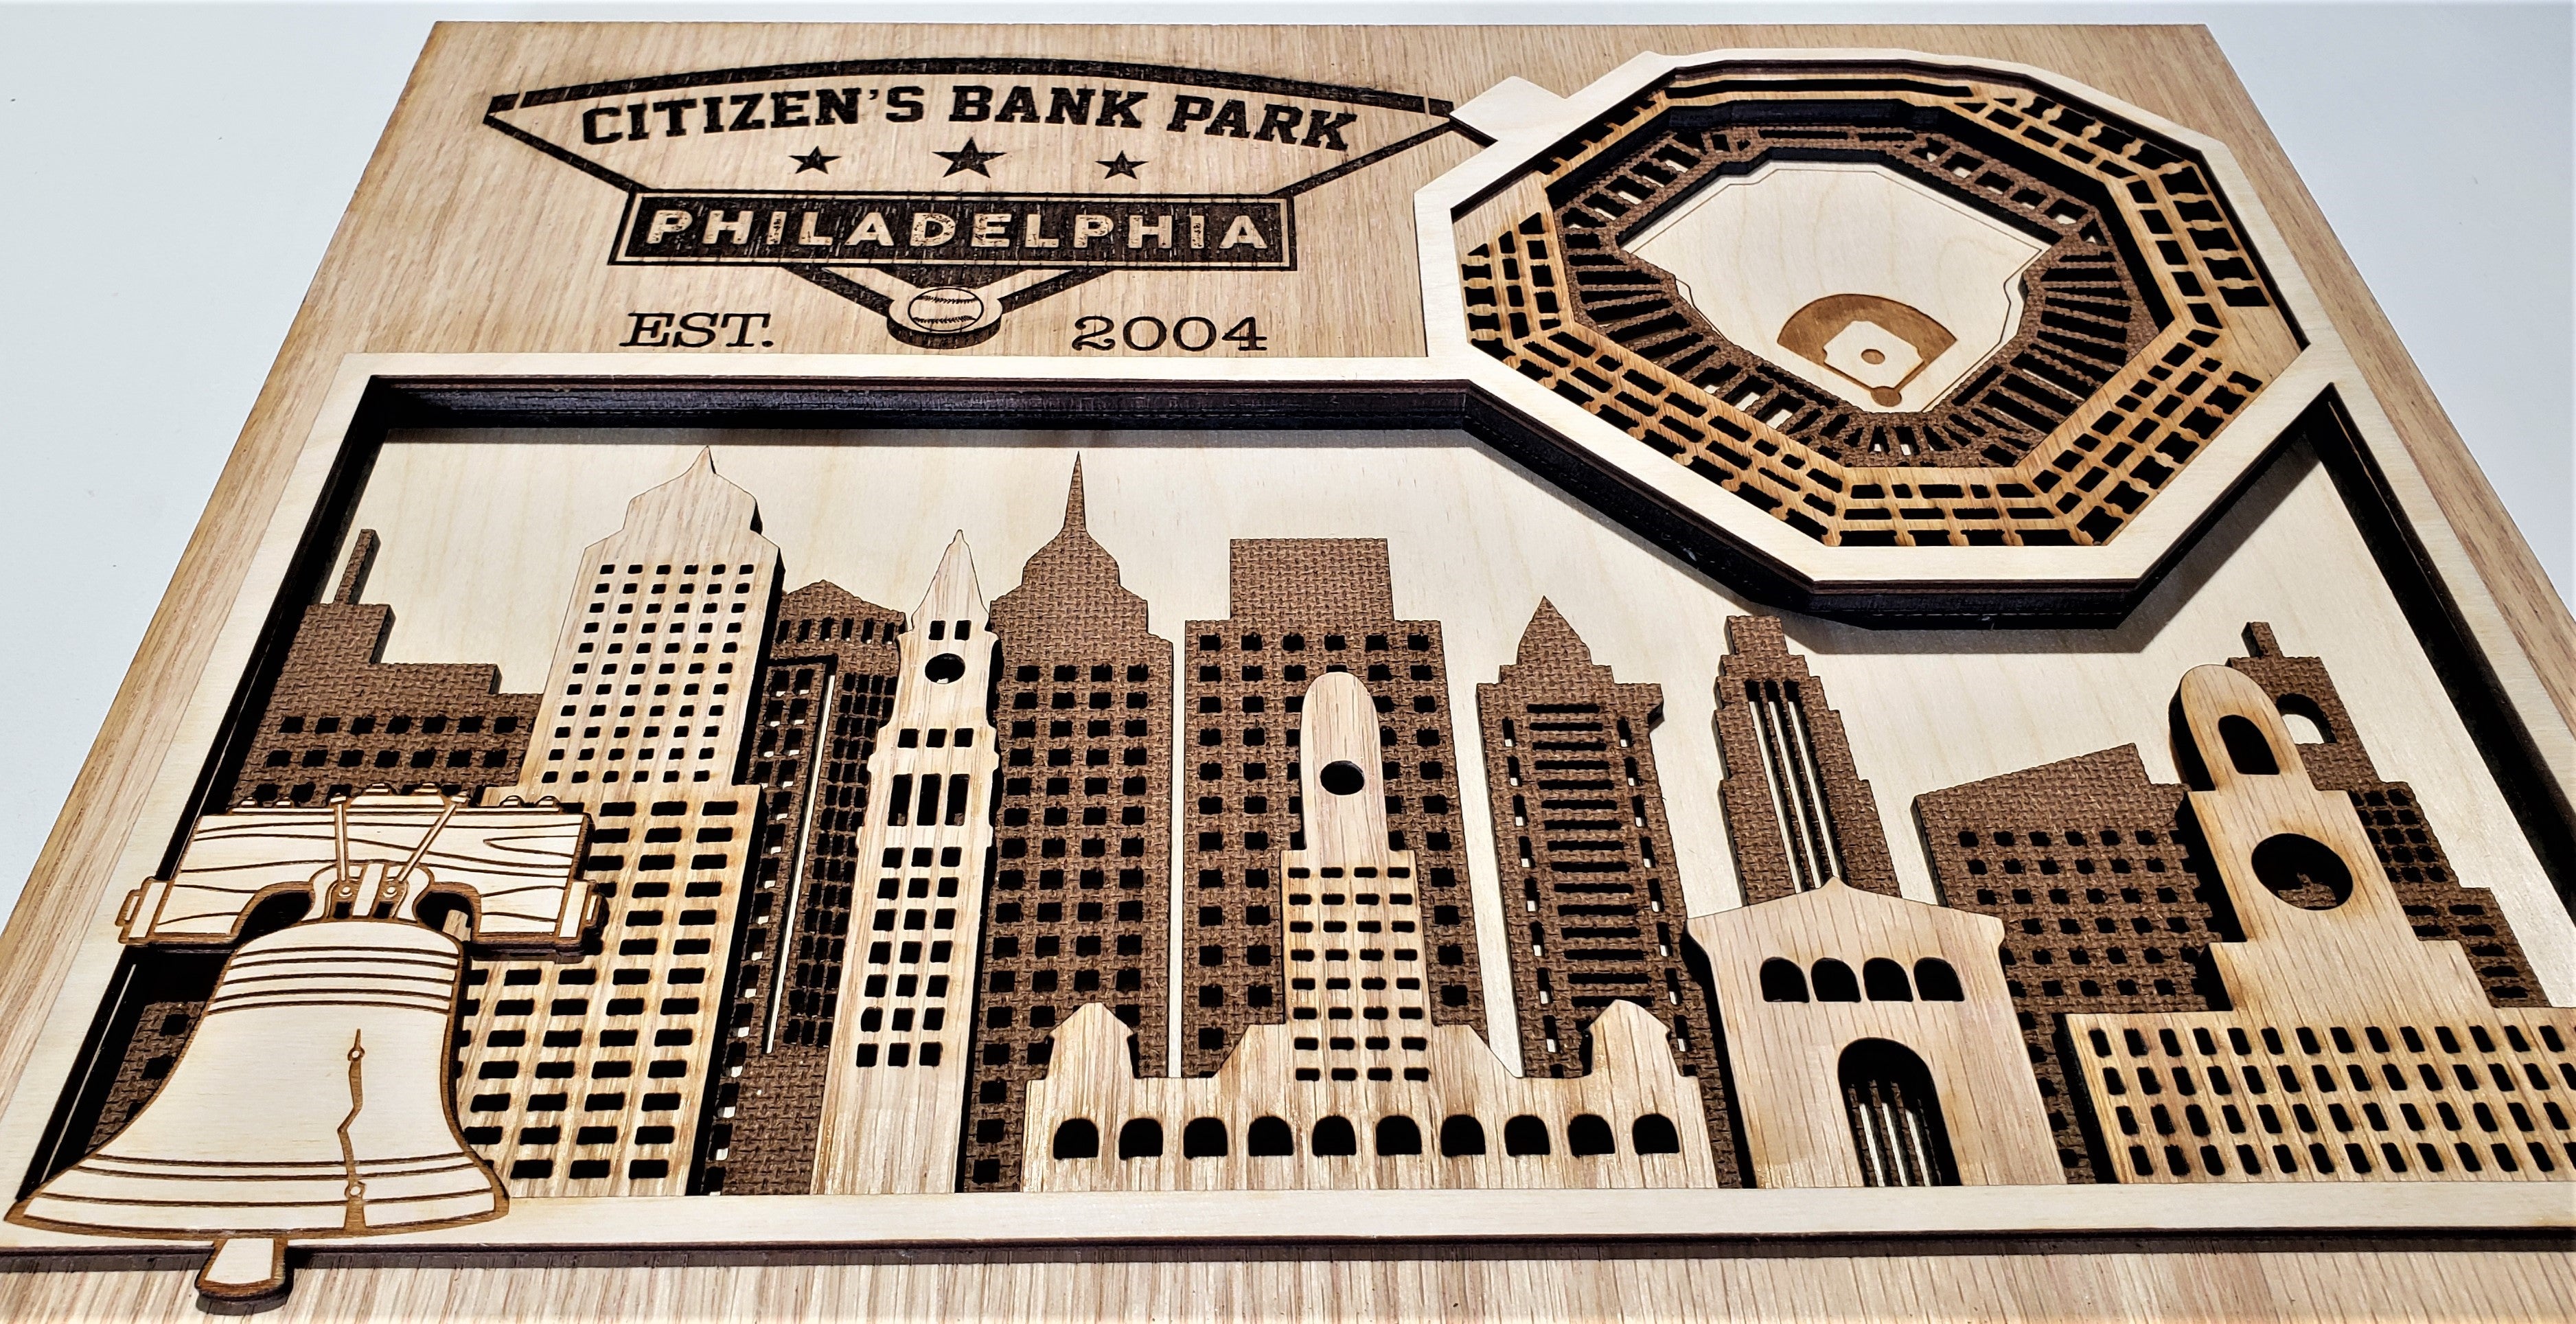 Citizen's Bank Park - Home of the Philadelphia Phillies